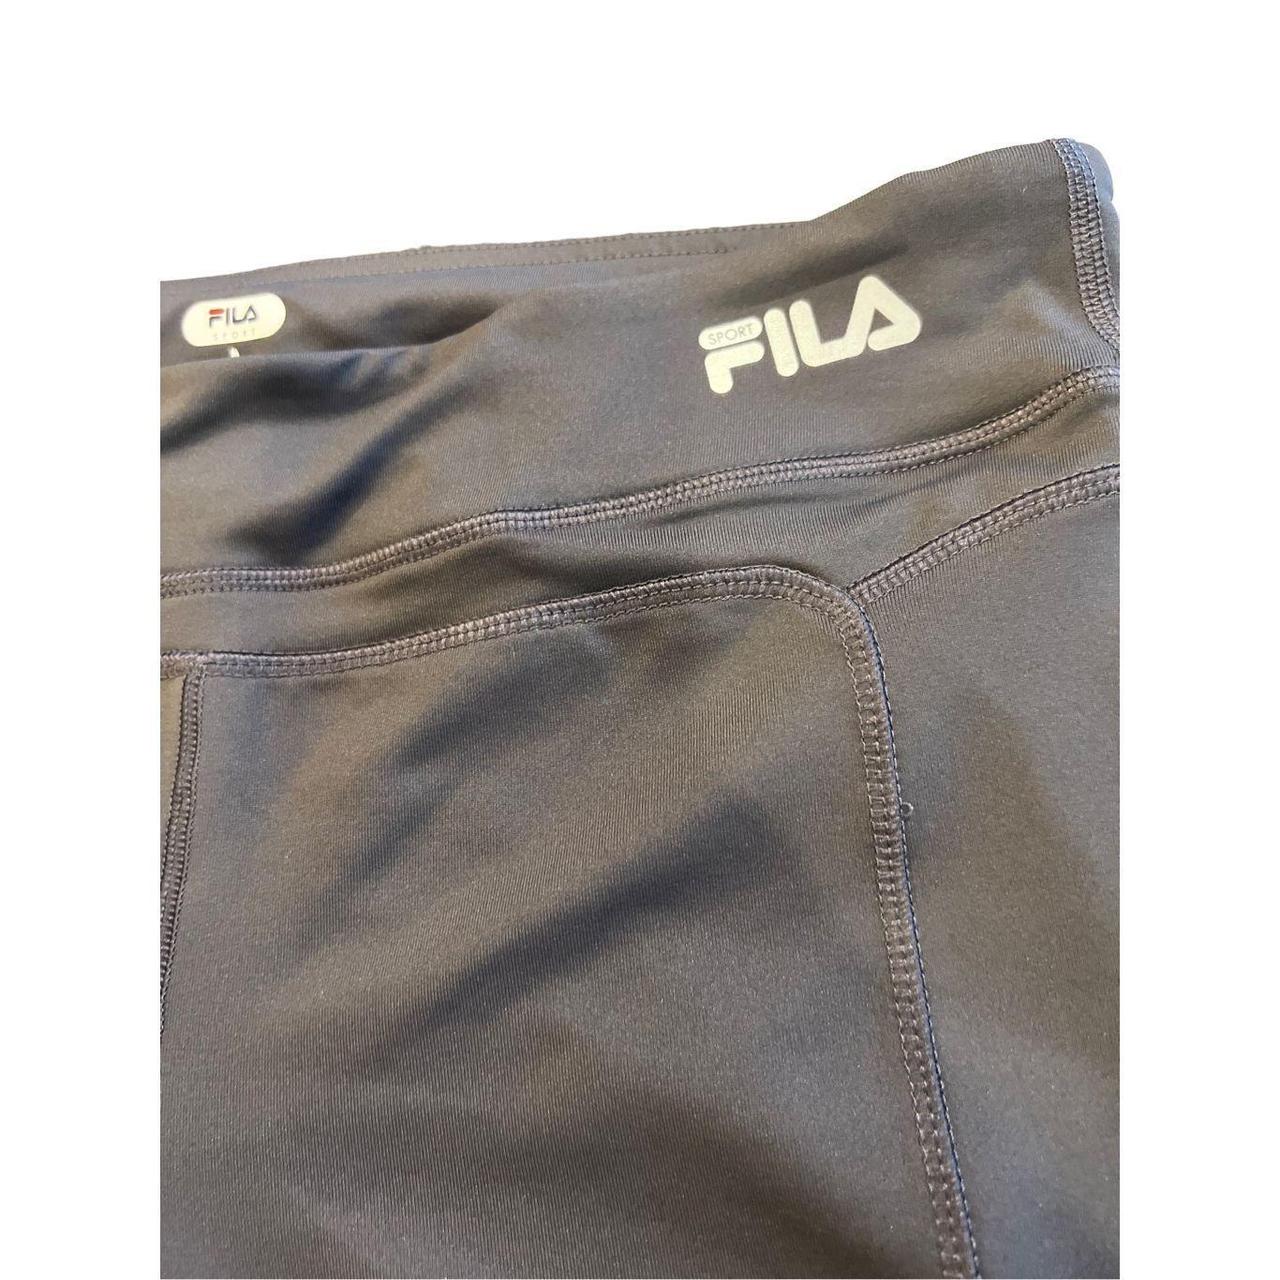 FILA sport capri pants size Medium in excellent